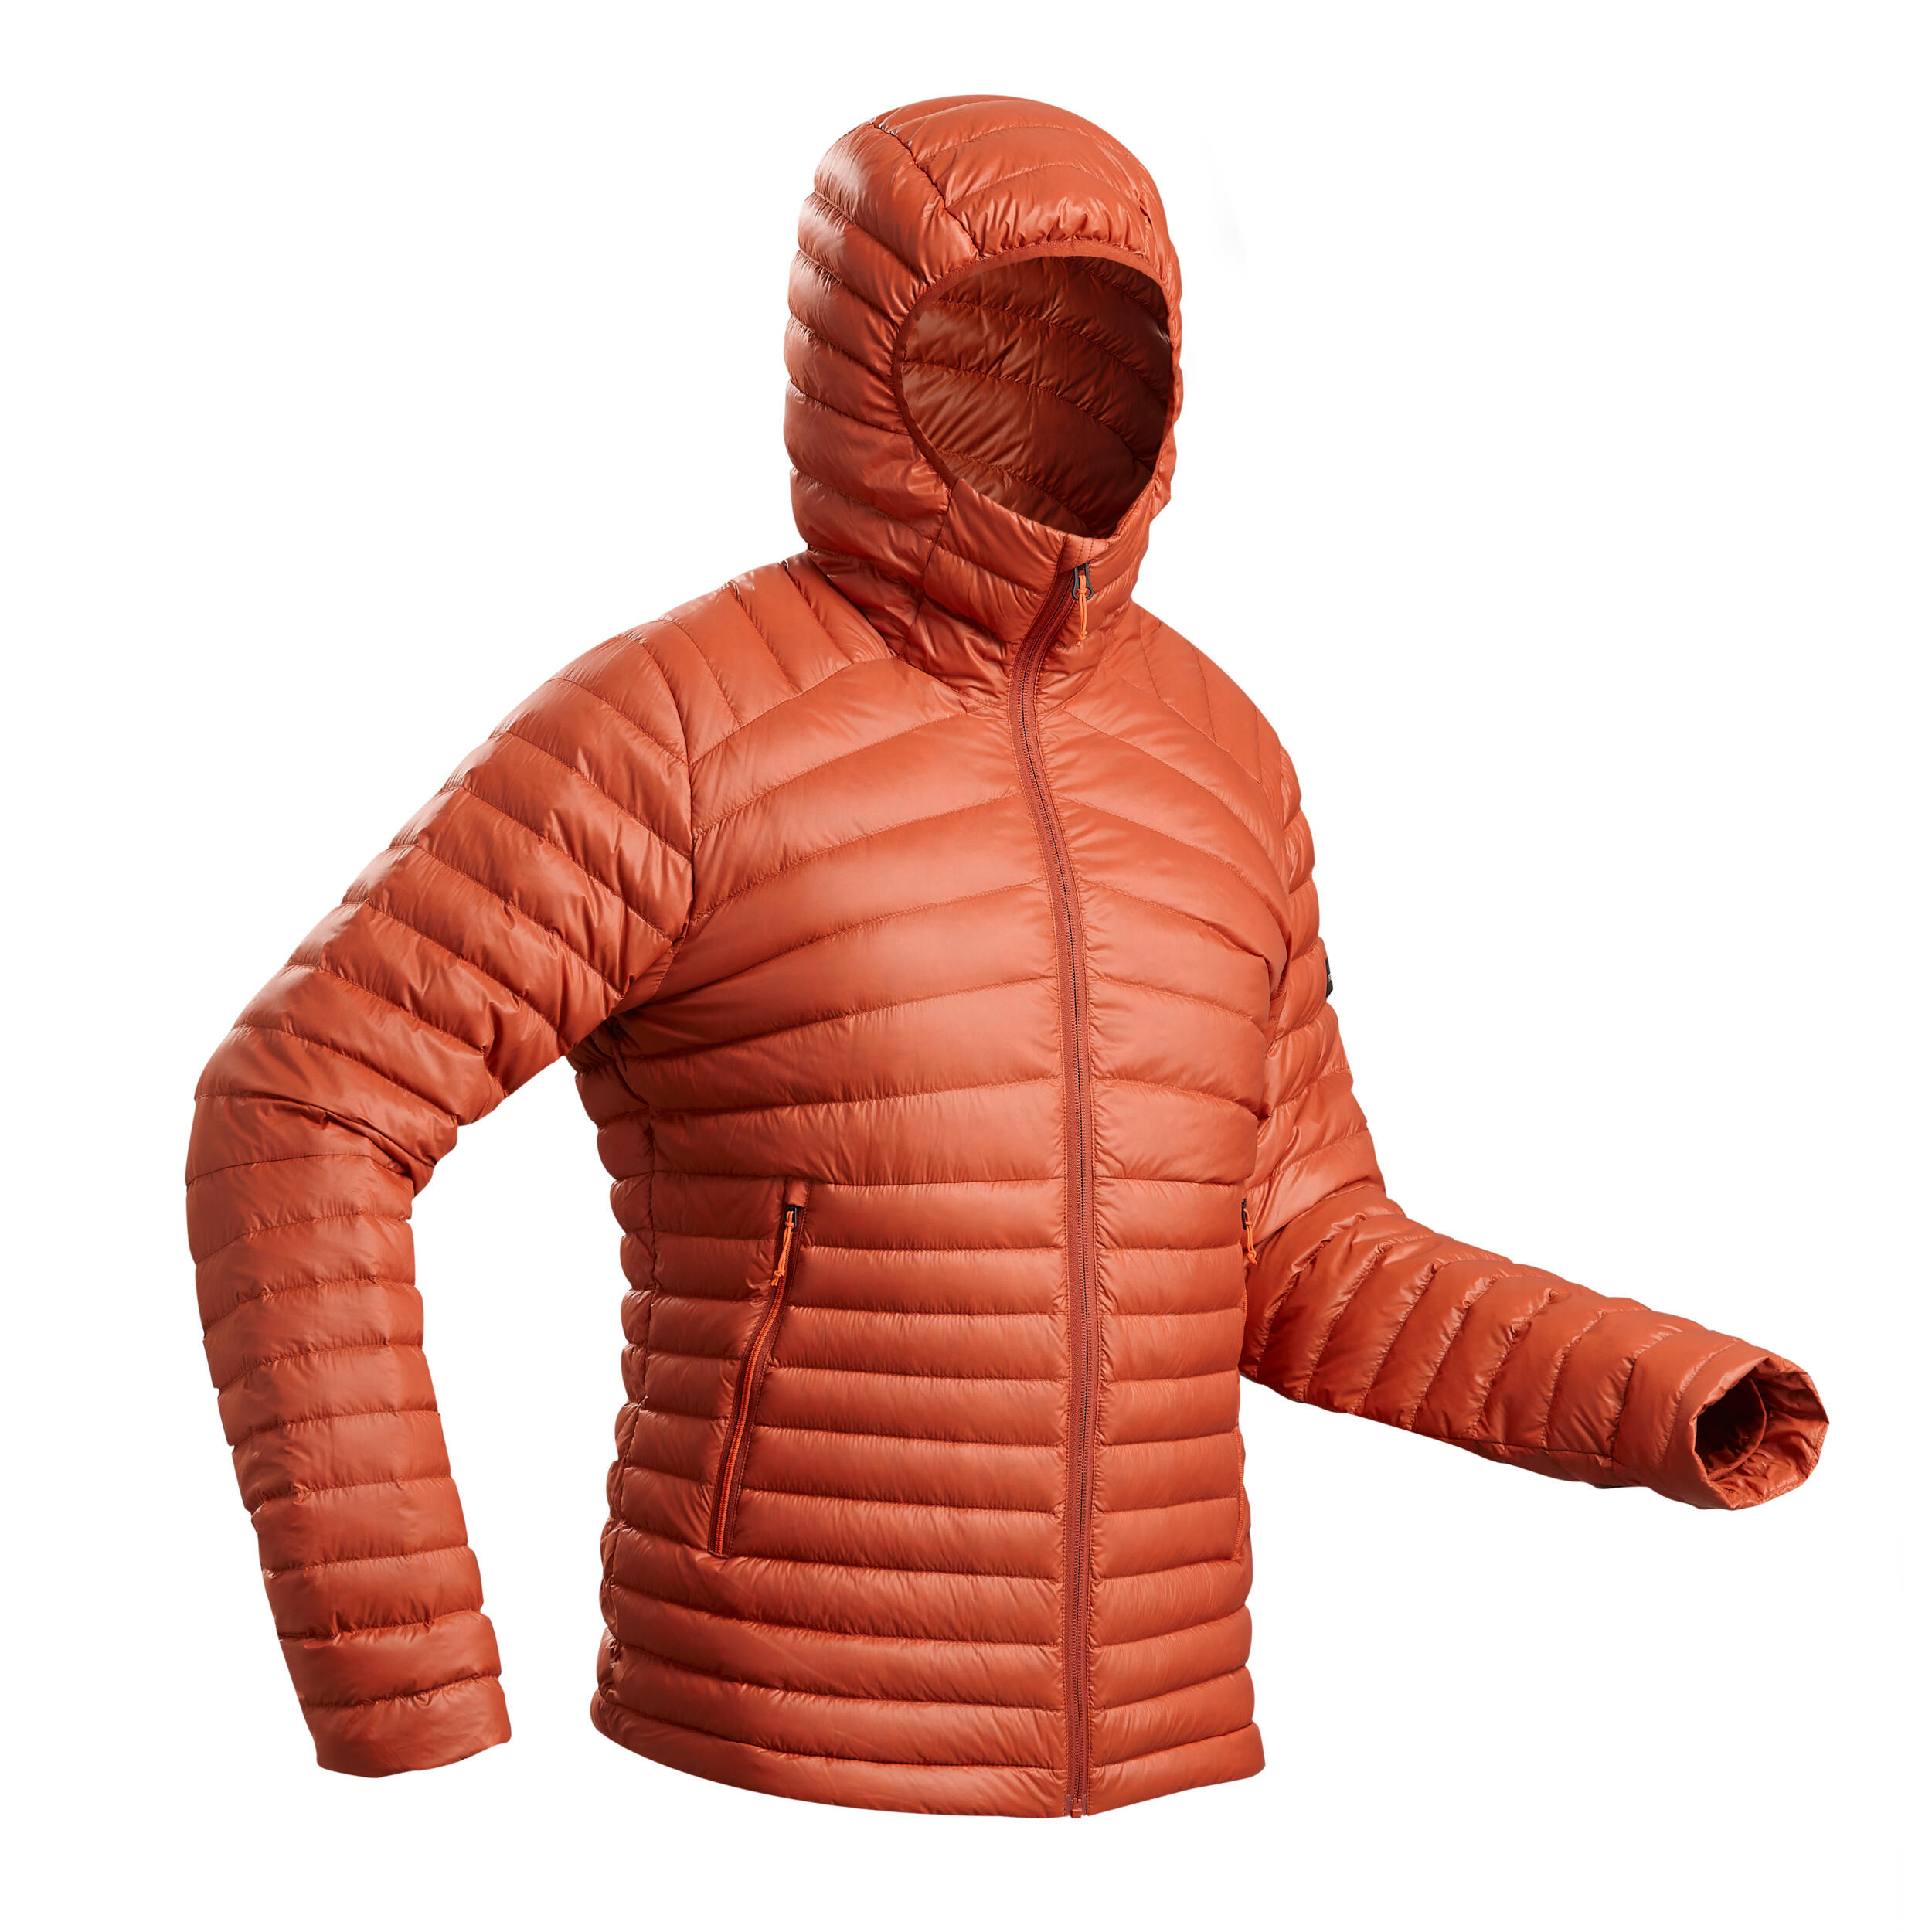 decathlon orange jacket